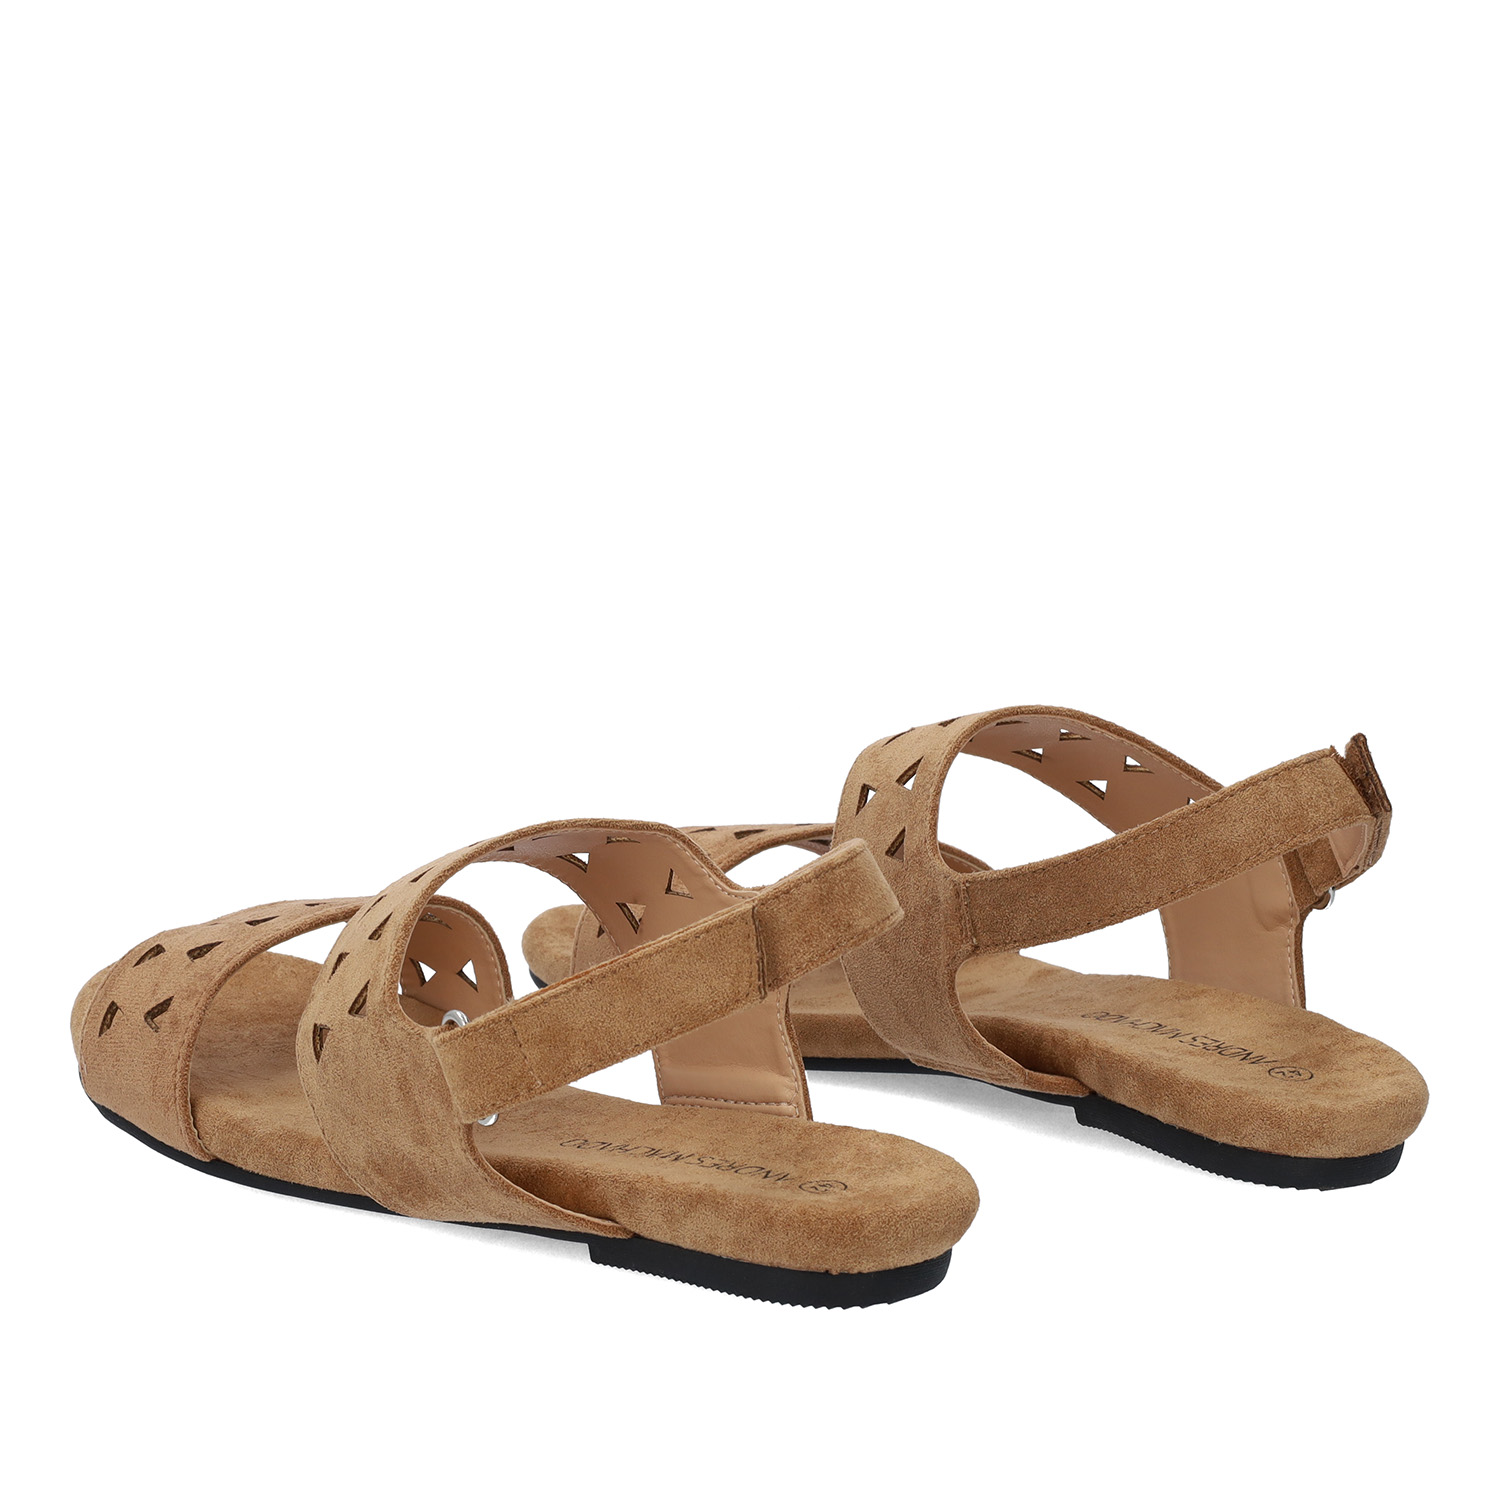 Camel colored faux suede flat sandals 